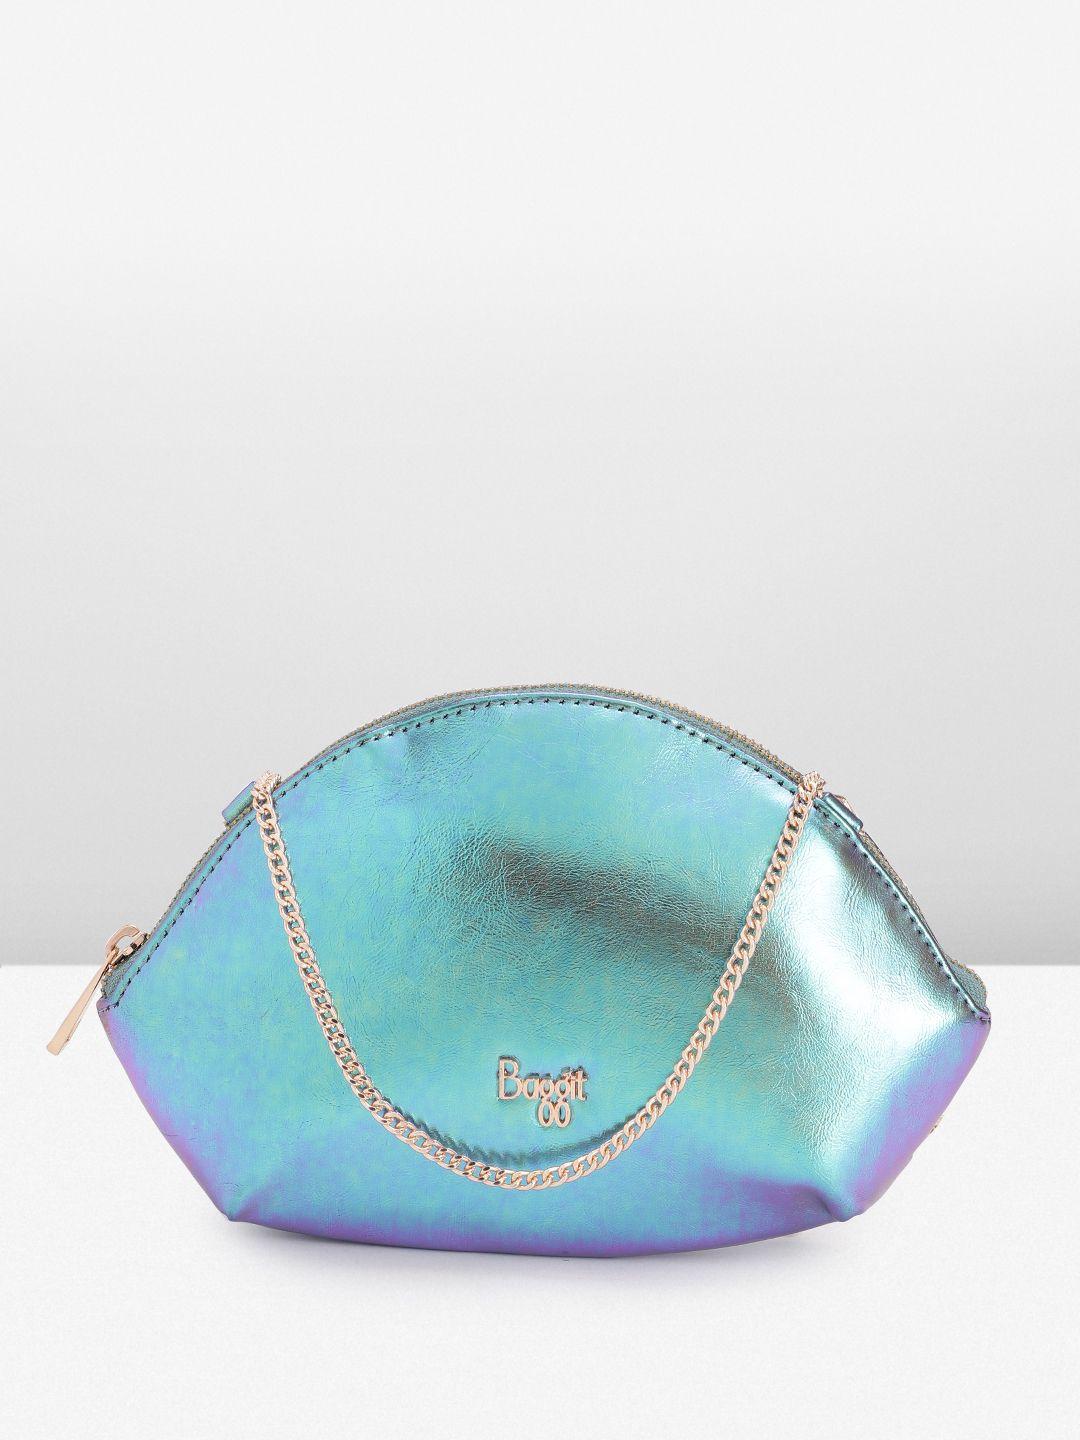 baggit women iridescent purse clutch